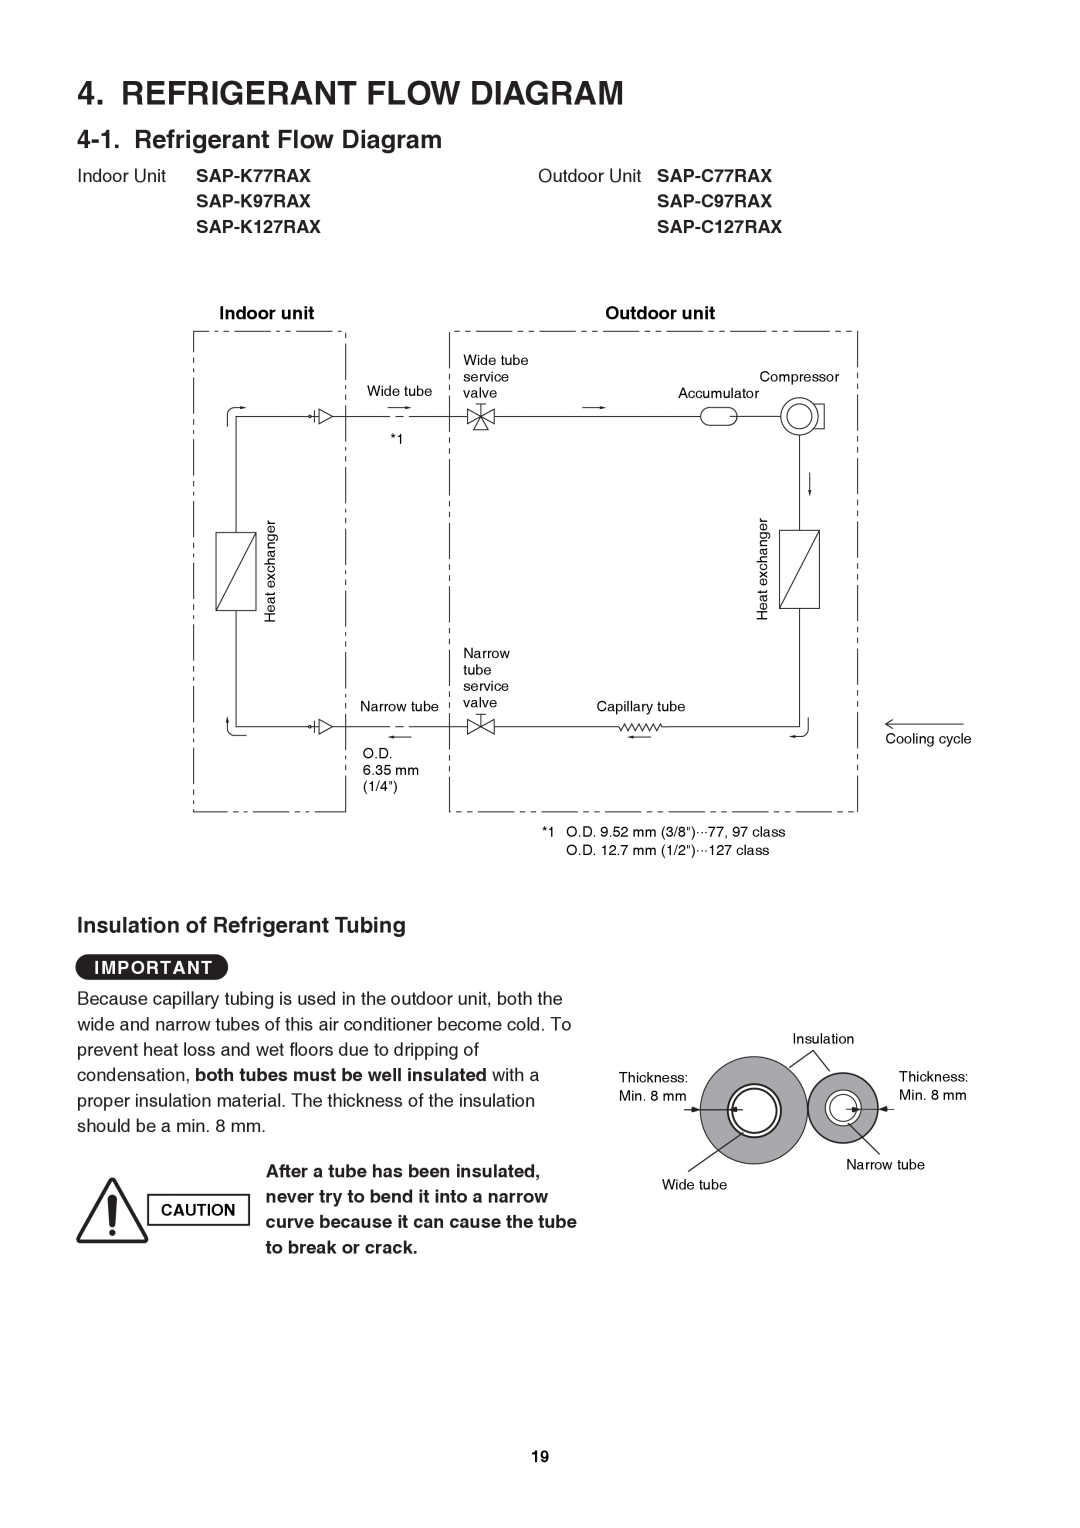 Sanyo Sanyo Split System Air Conditoner Refrigerant Flow Diagram, Insulation of Refrigerant Tubing, SAP-K97RAX, SAP-C97RAX 